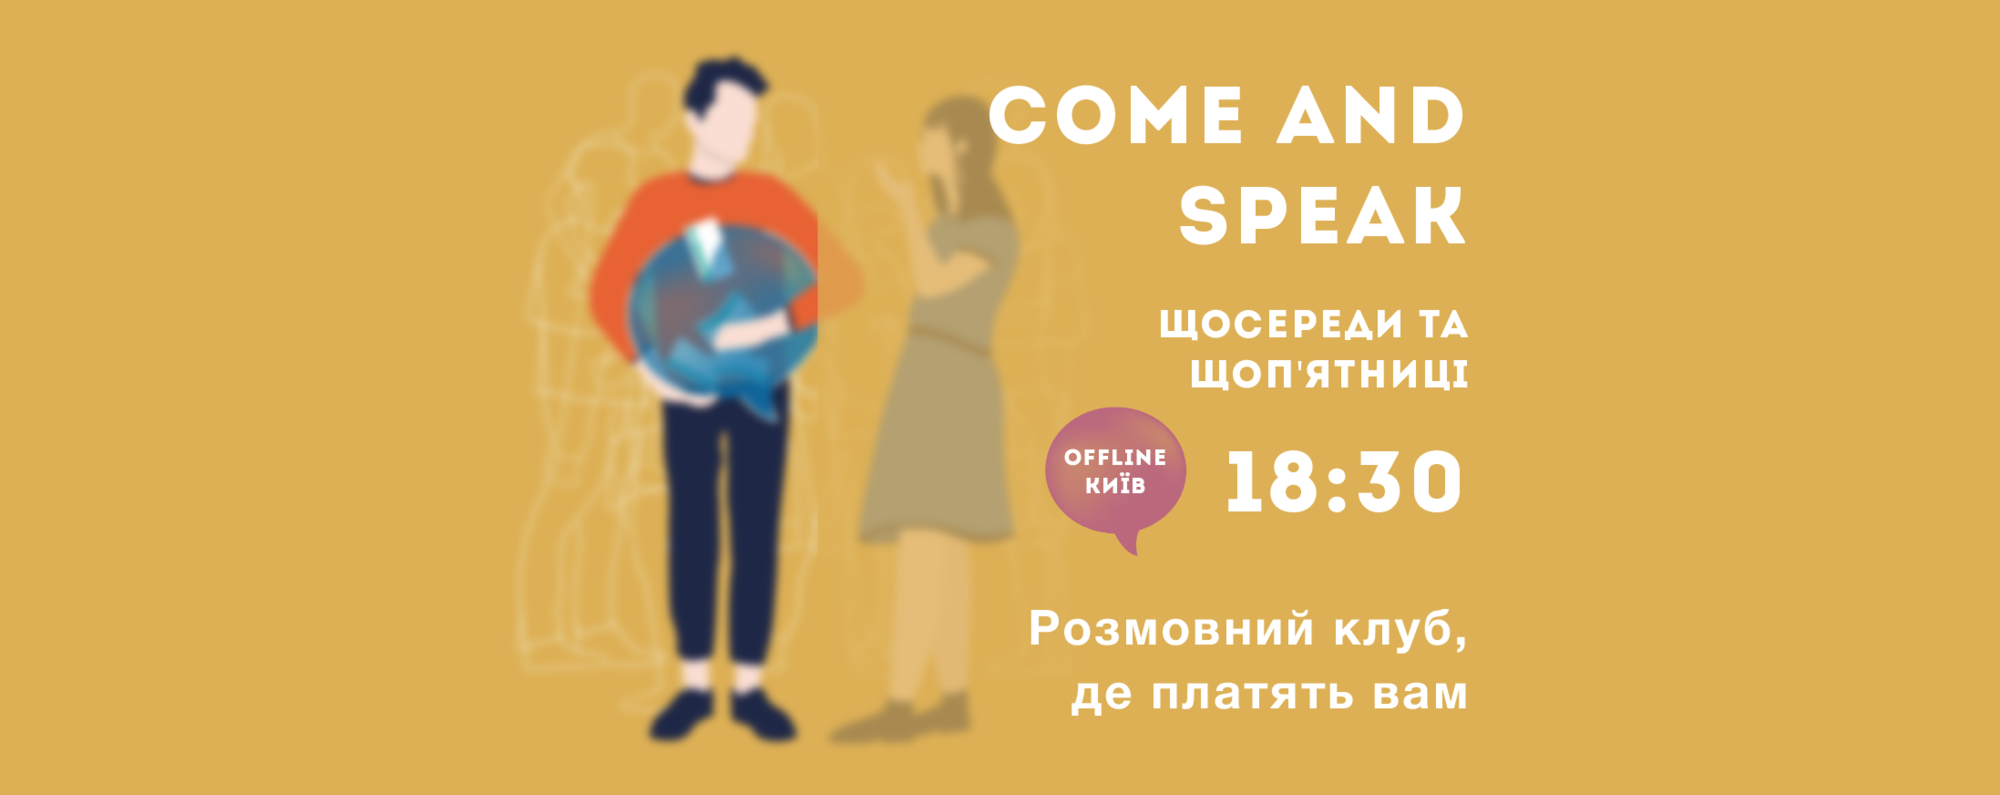 Come and Speak